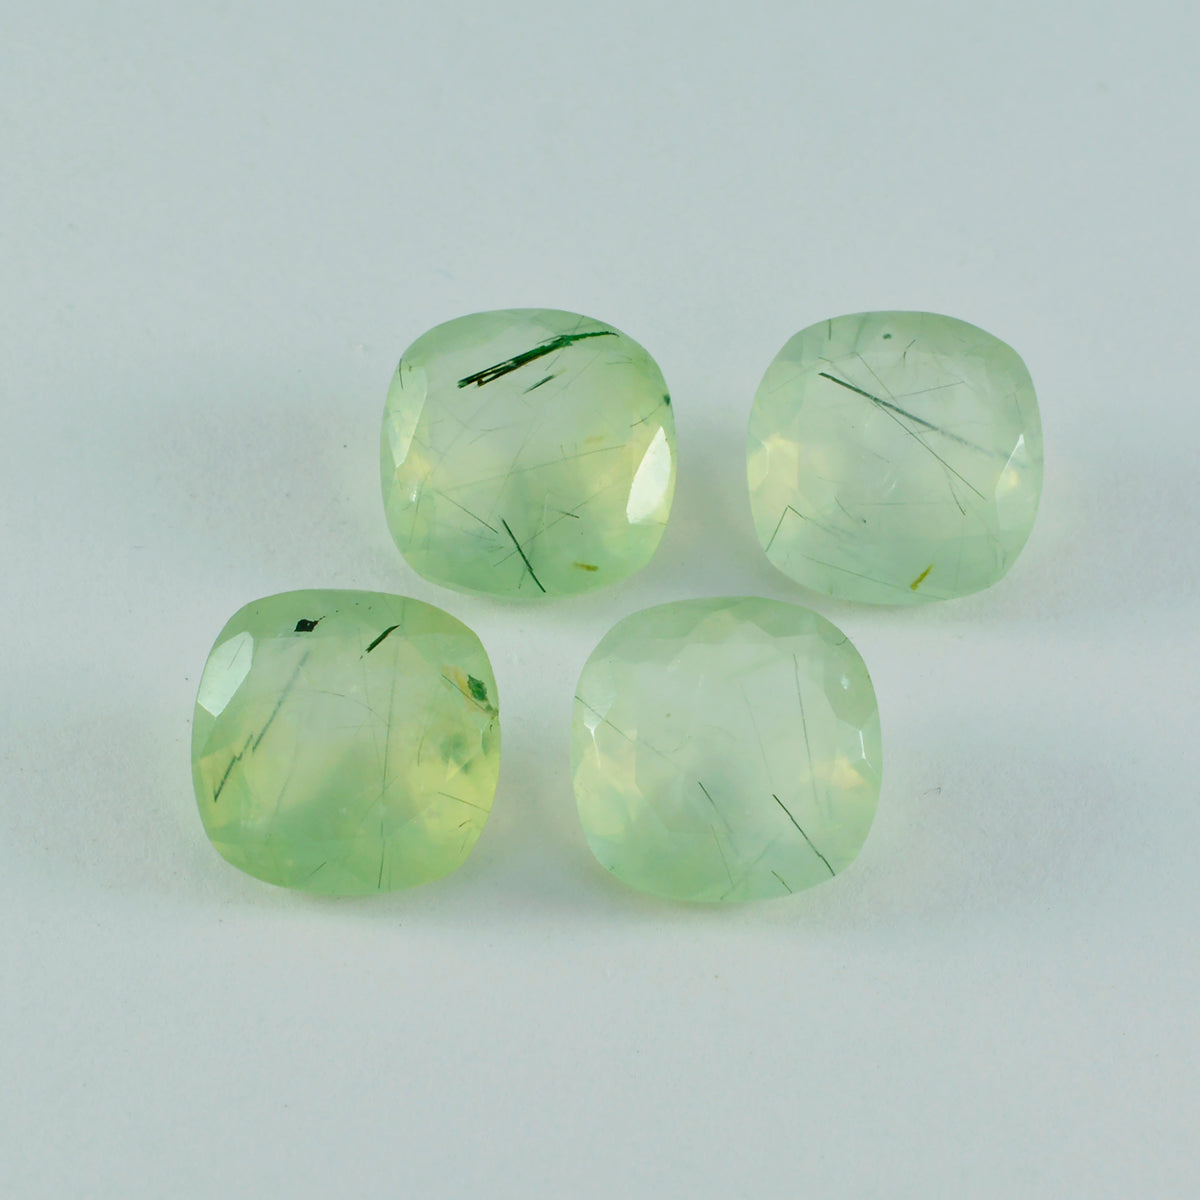 riyogems 1 st grön prehnite fasetterad 13x13 mm kudde form stilig kvalitets pärla